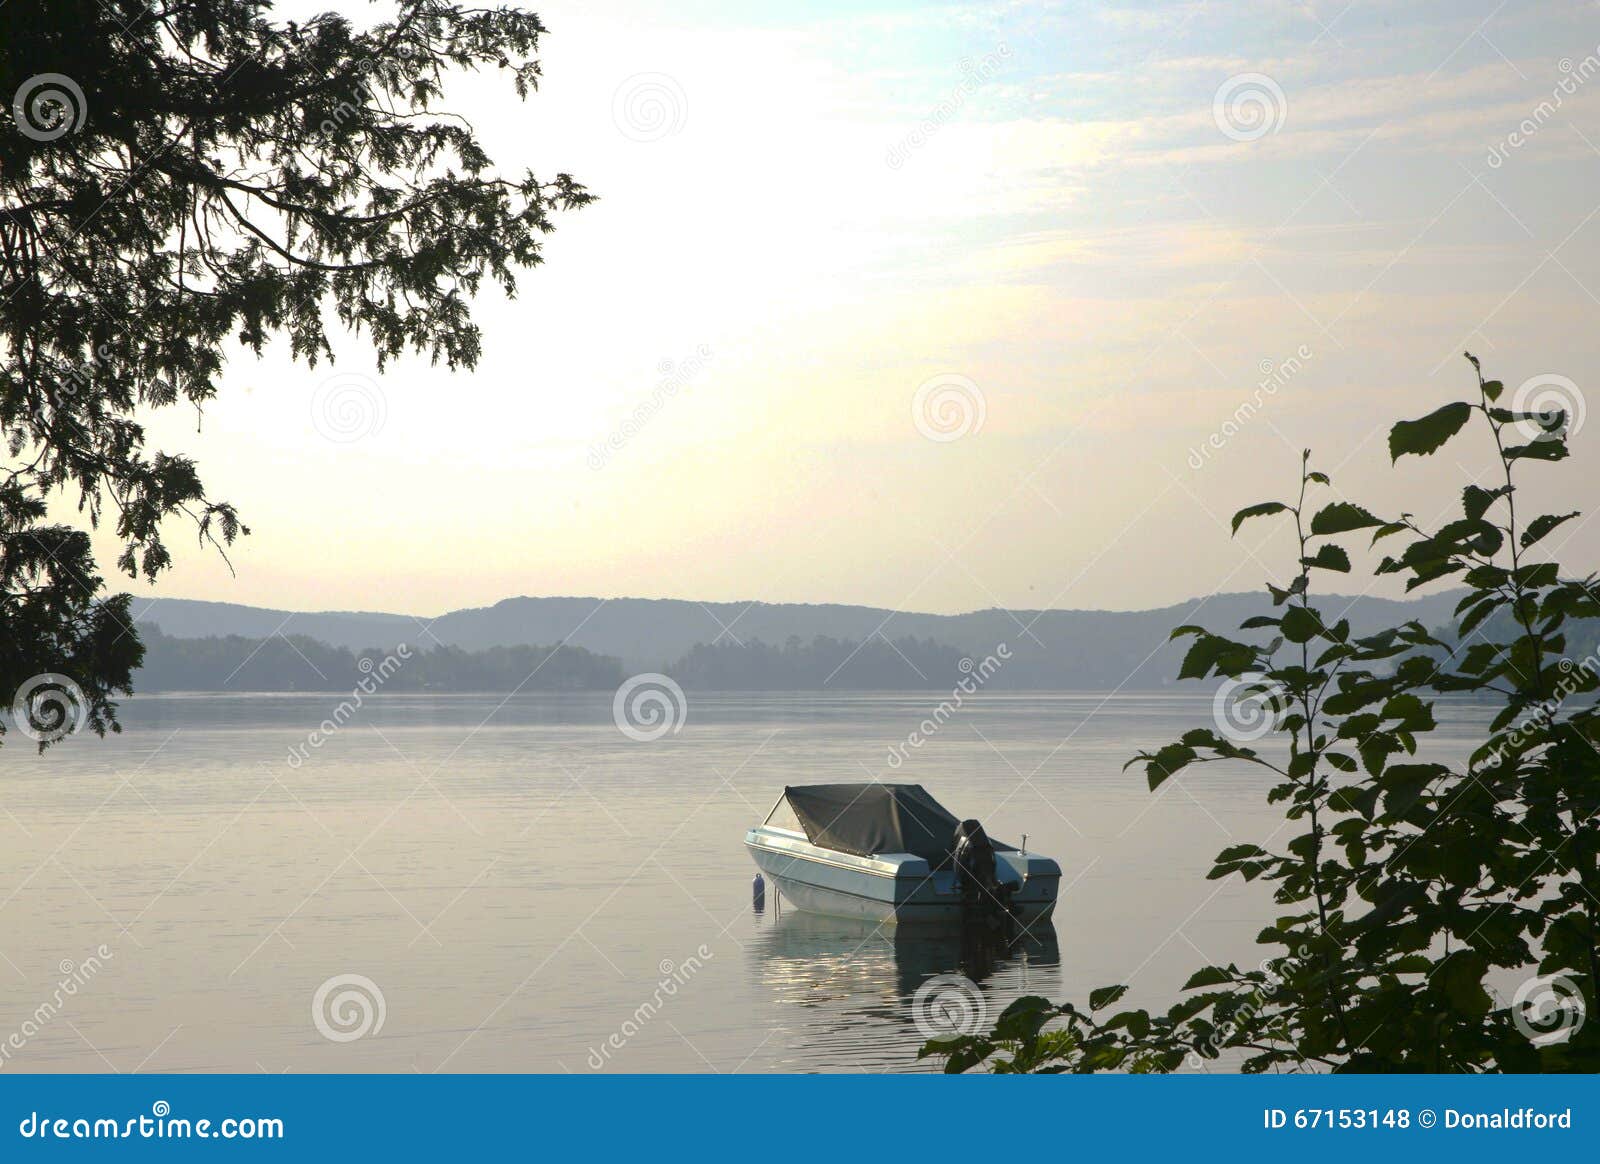 early morning on lake of bays, muskoka, ontario, canada